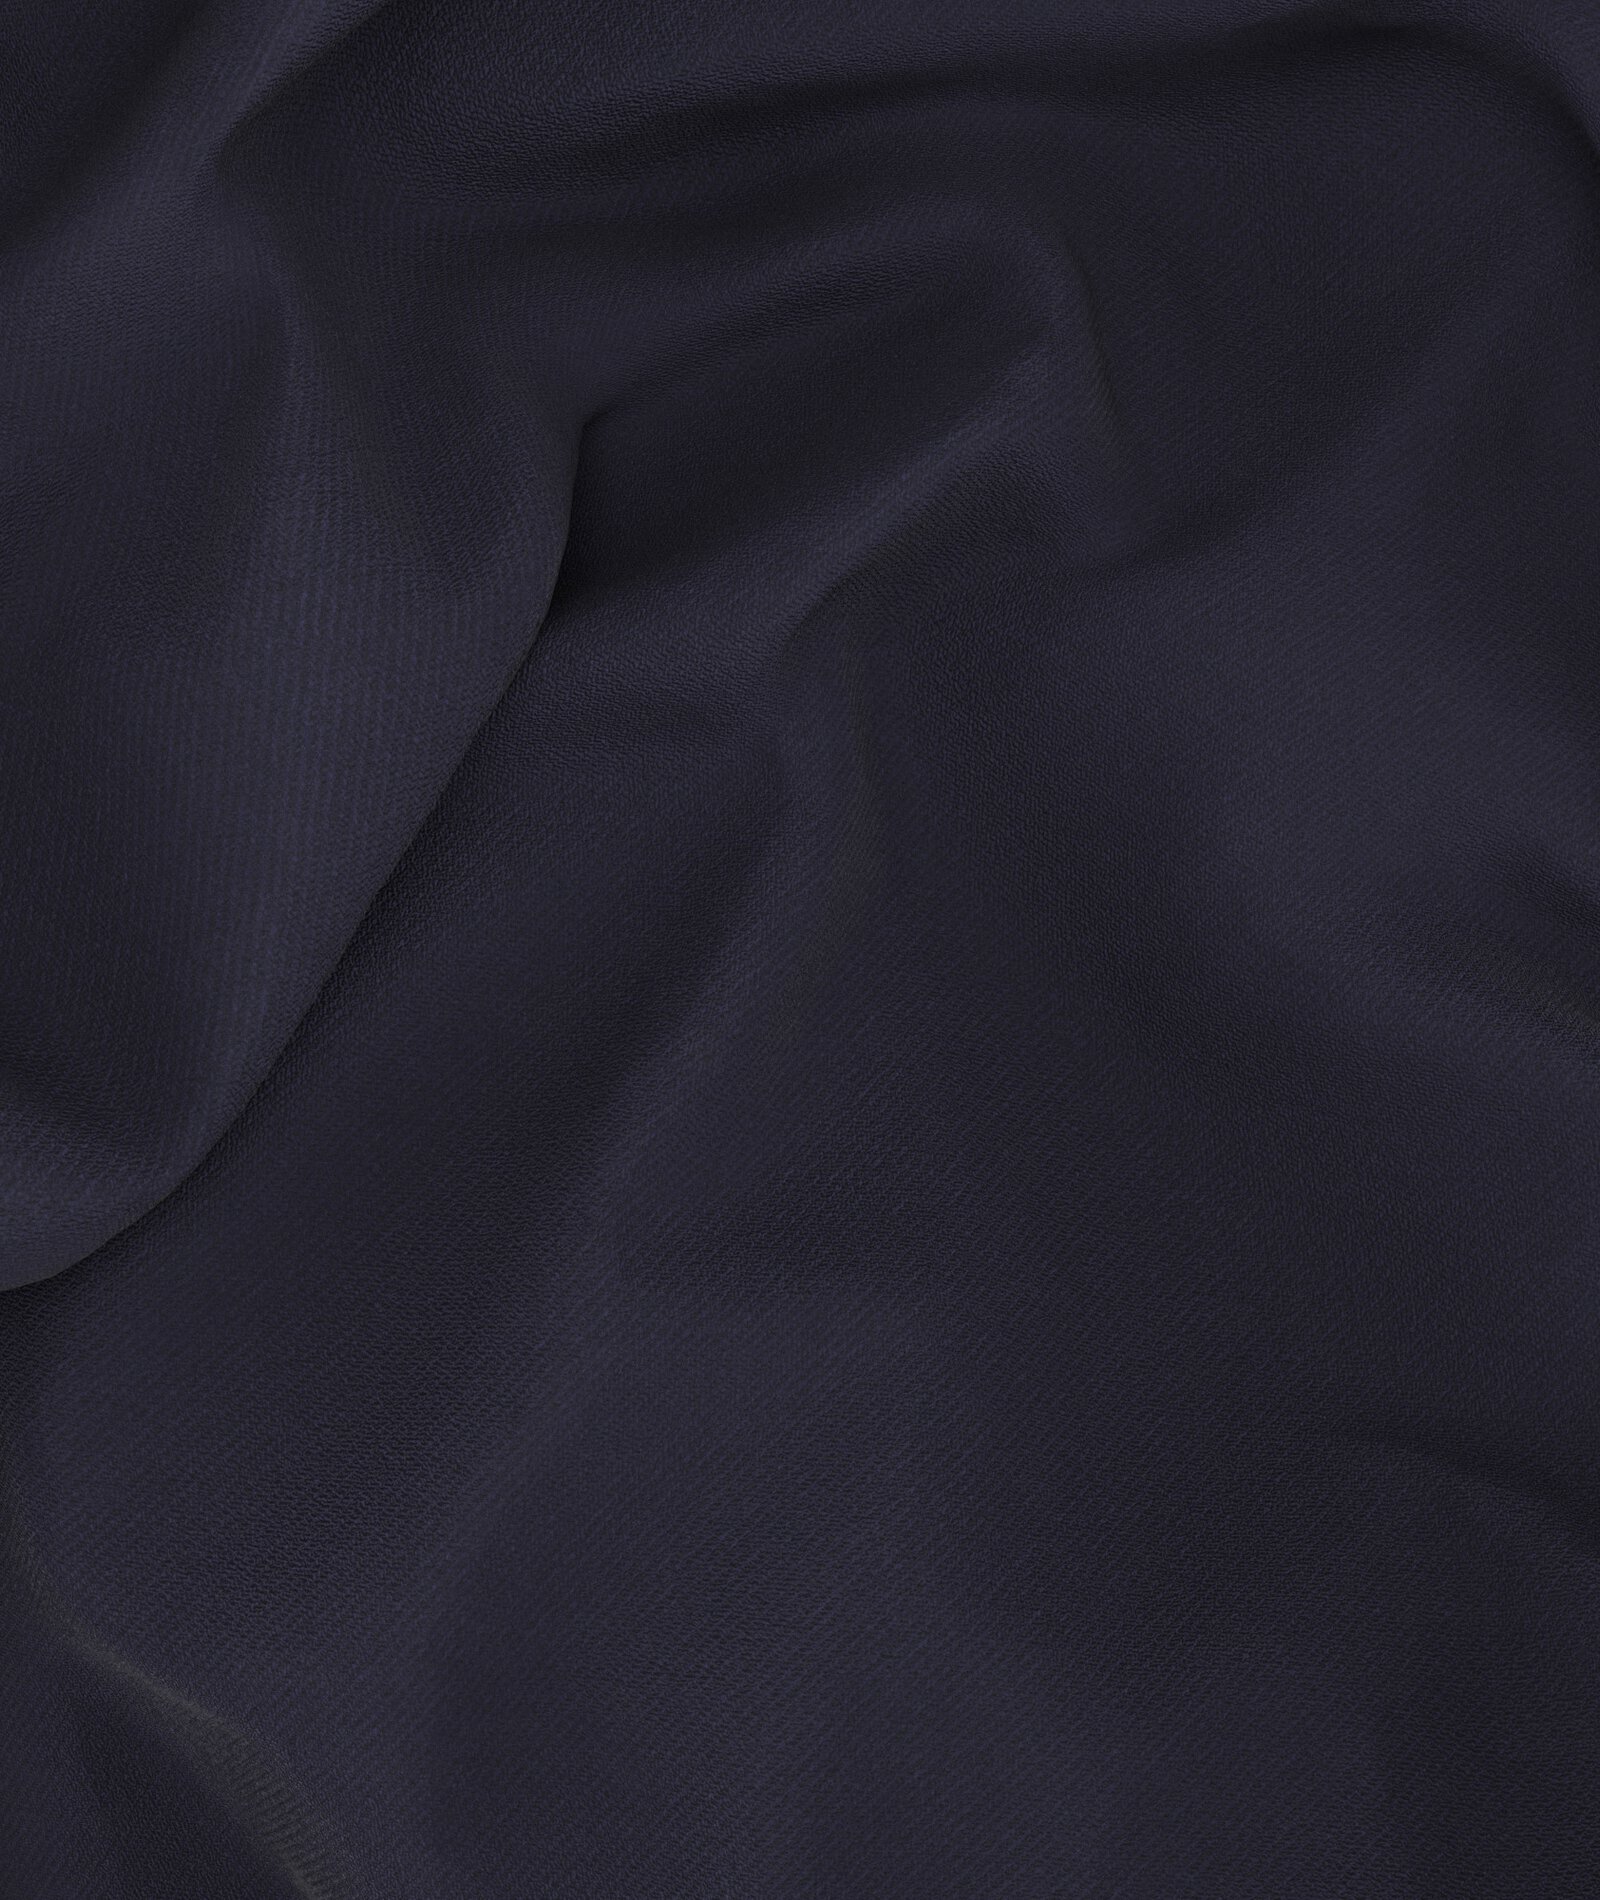 Plain Blue 100% Merino Wool Suit